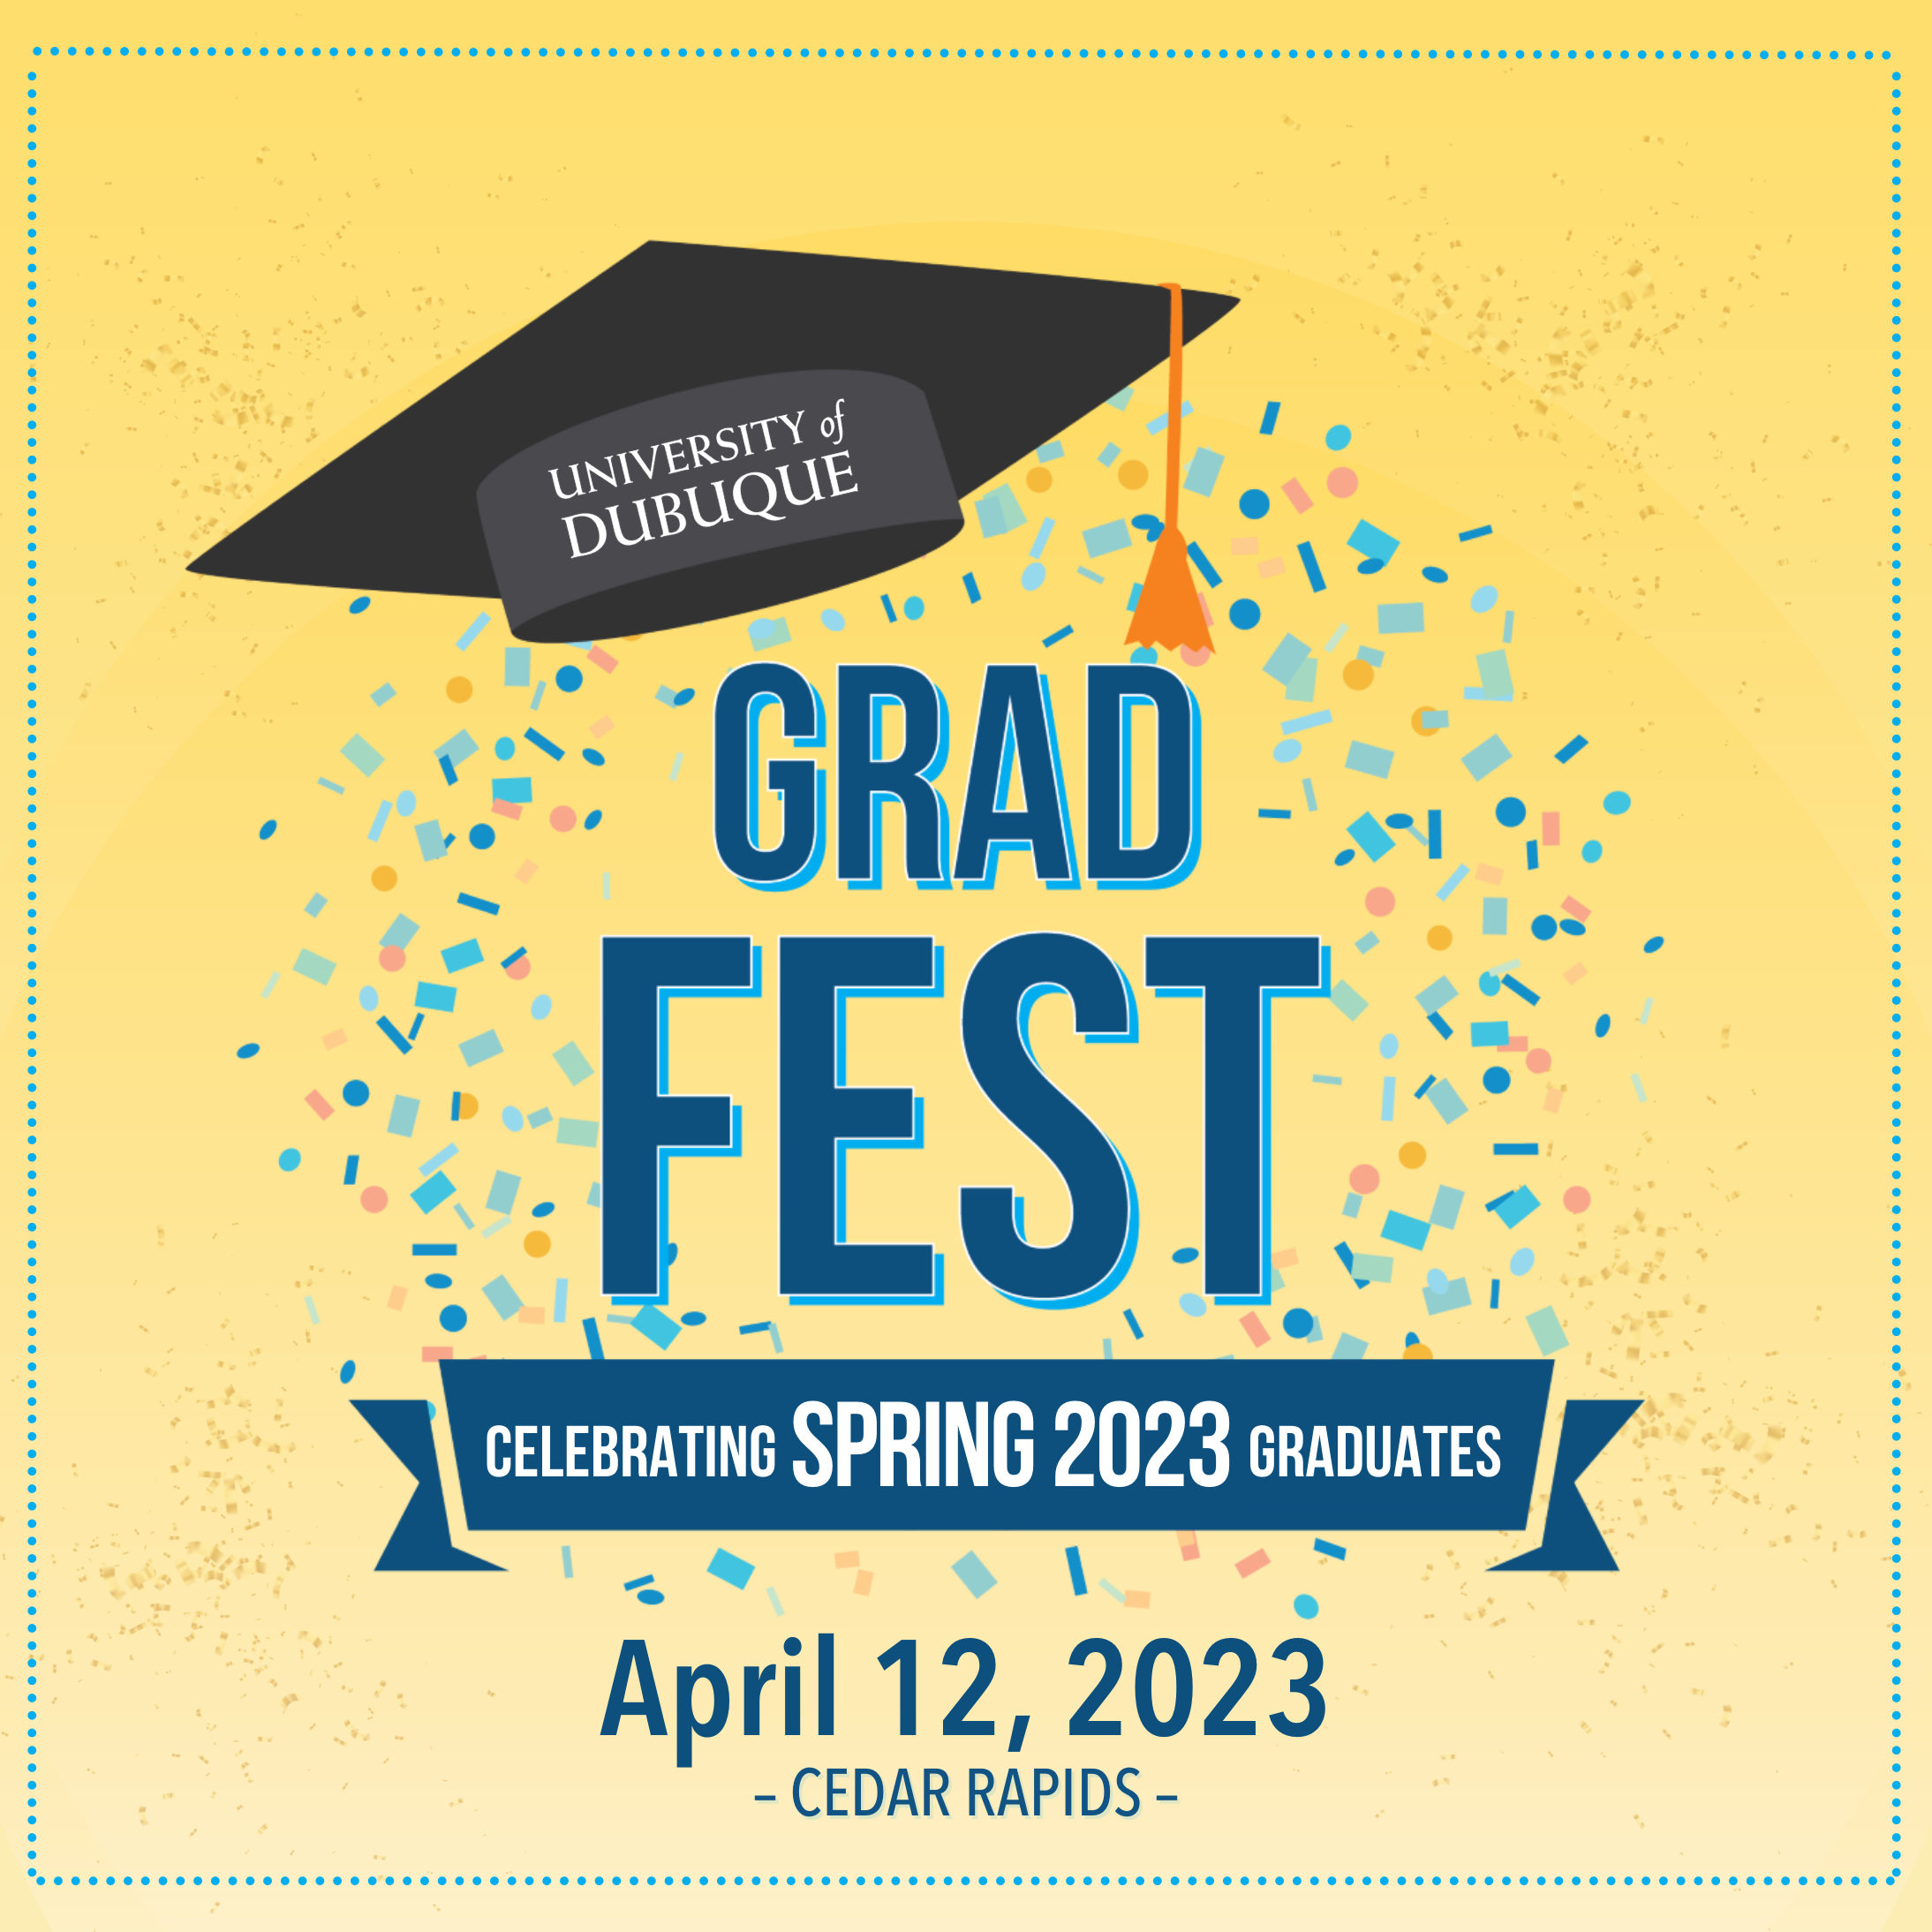 Spring Grad Fest 2023 - Cedar Rapids